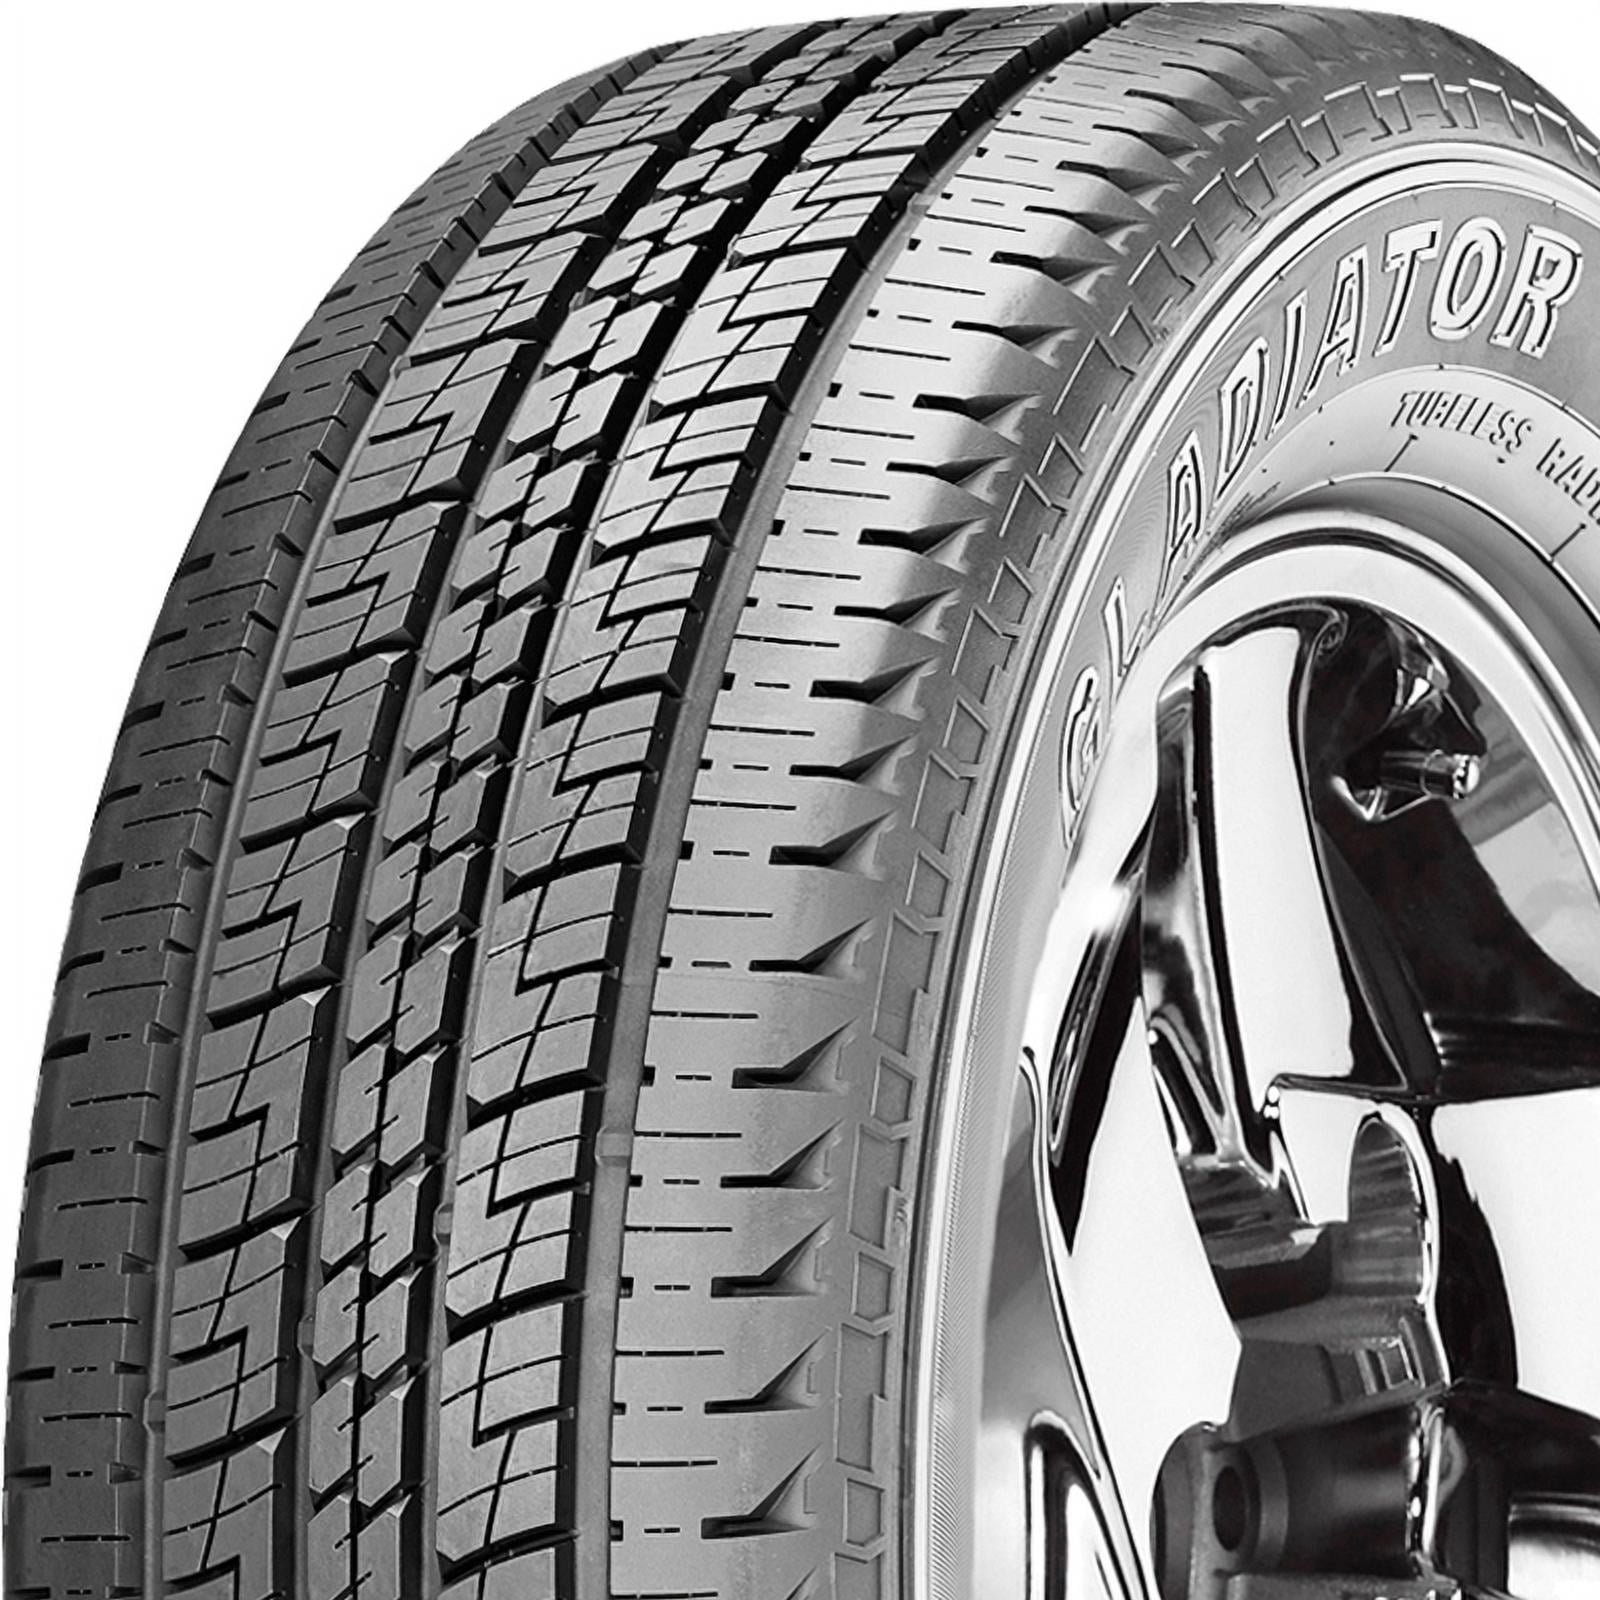 JK Tyre Elanzo Touring A/S P215/70R16 99T All Season Radial Tire 